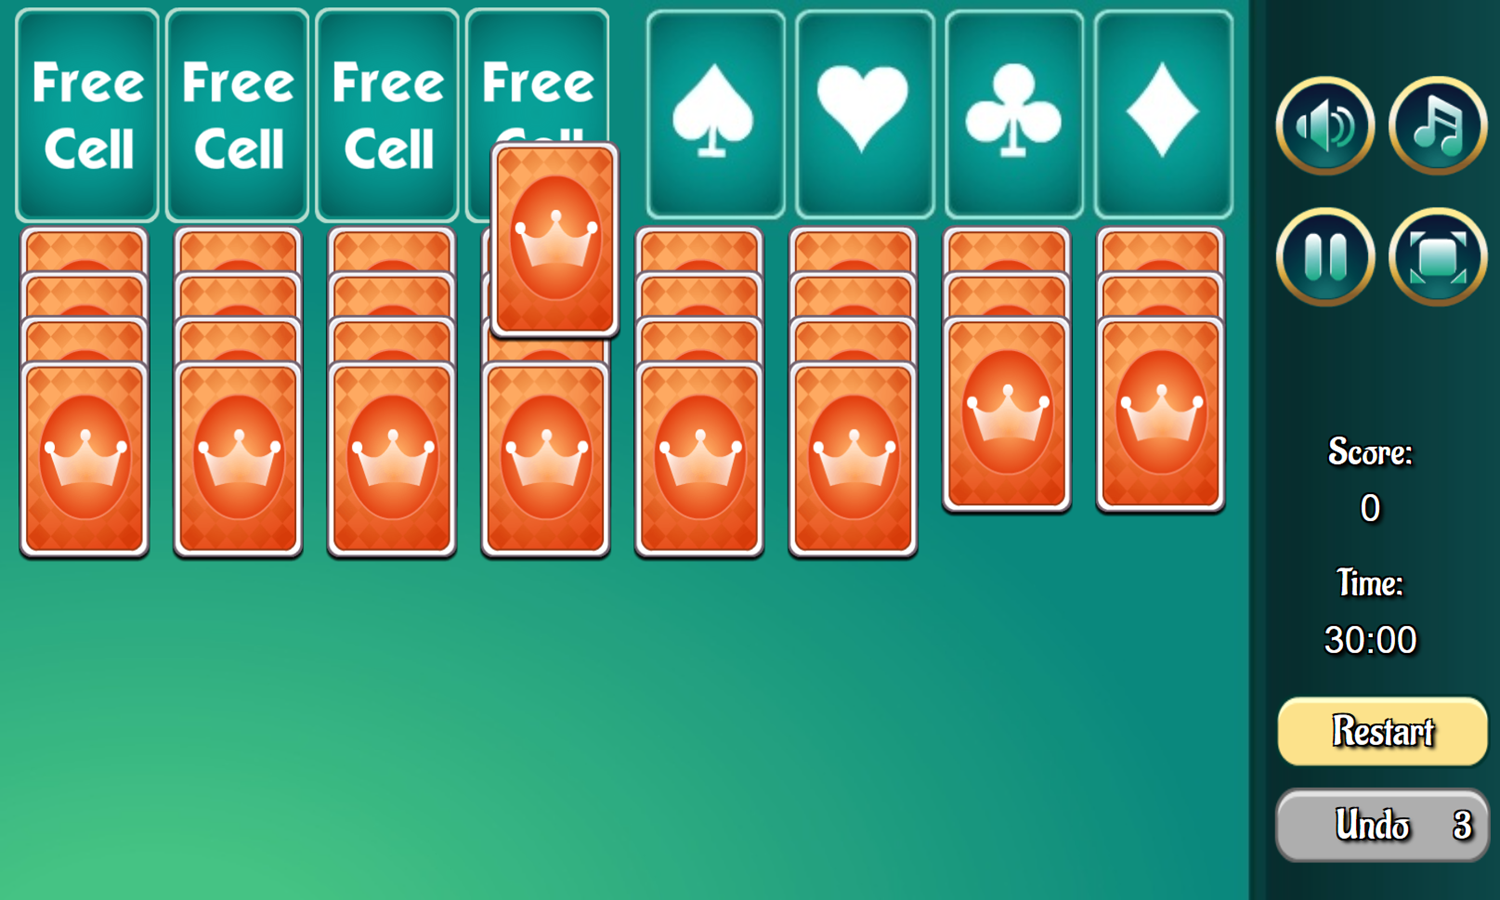 Free Cell Game Shuffling Screenshot.